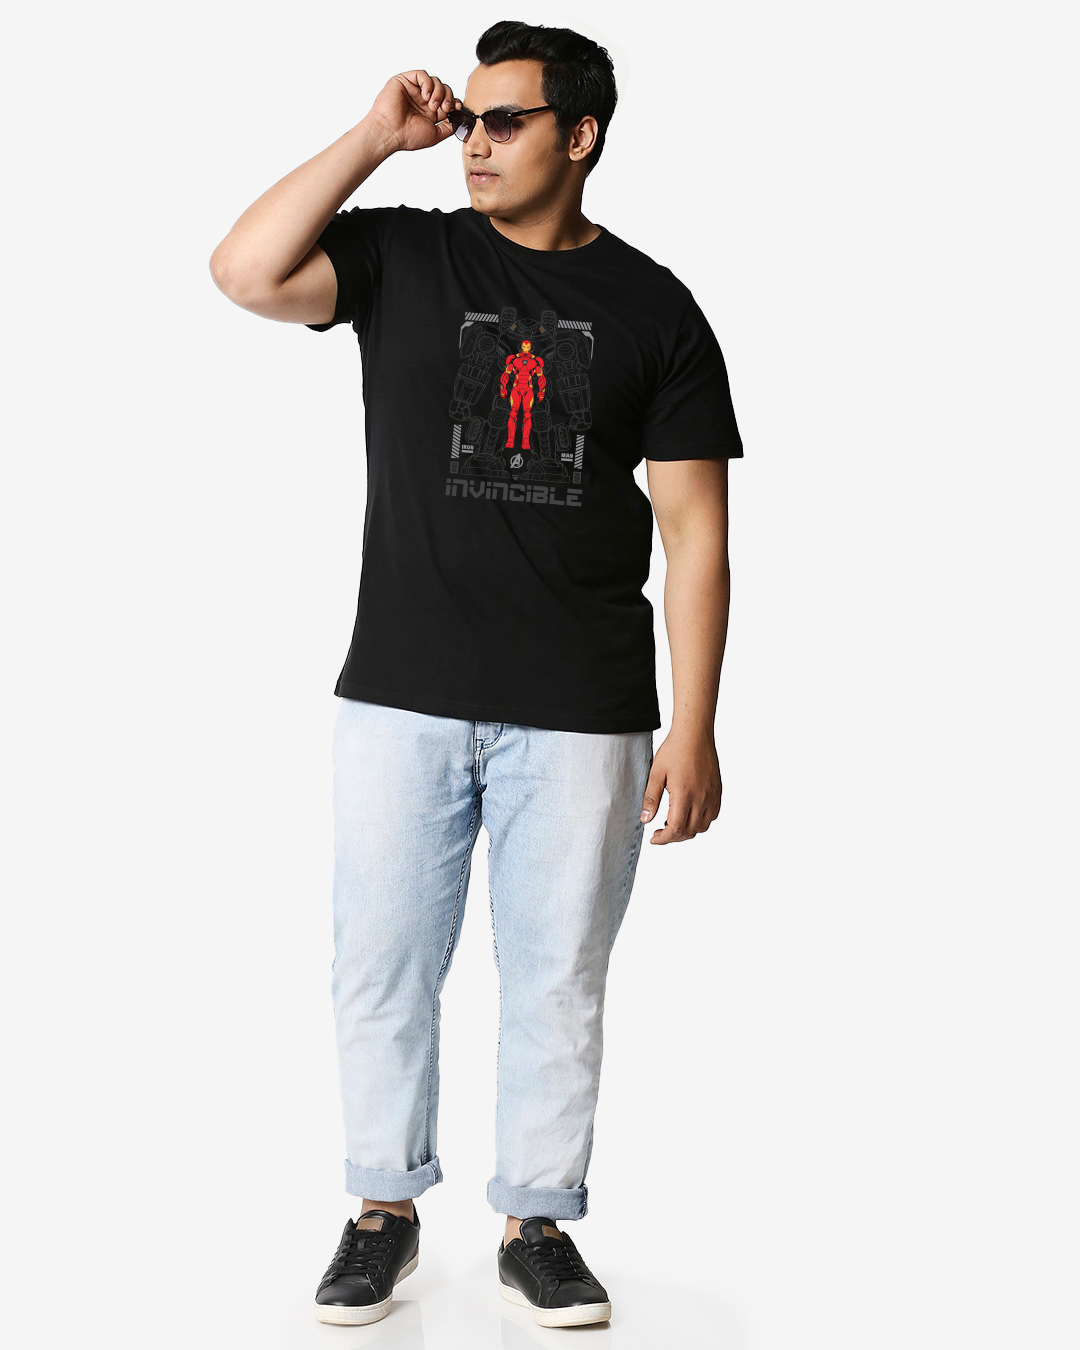 Shop Invincible Ironman Half Sleeves Printed T-Shirt Plus Size (AVL)-Back